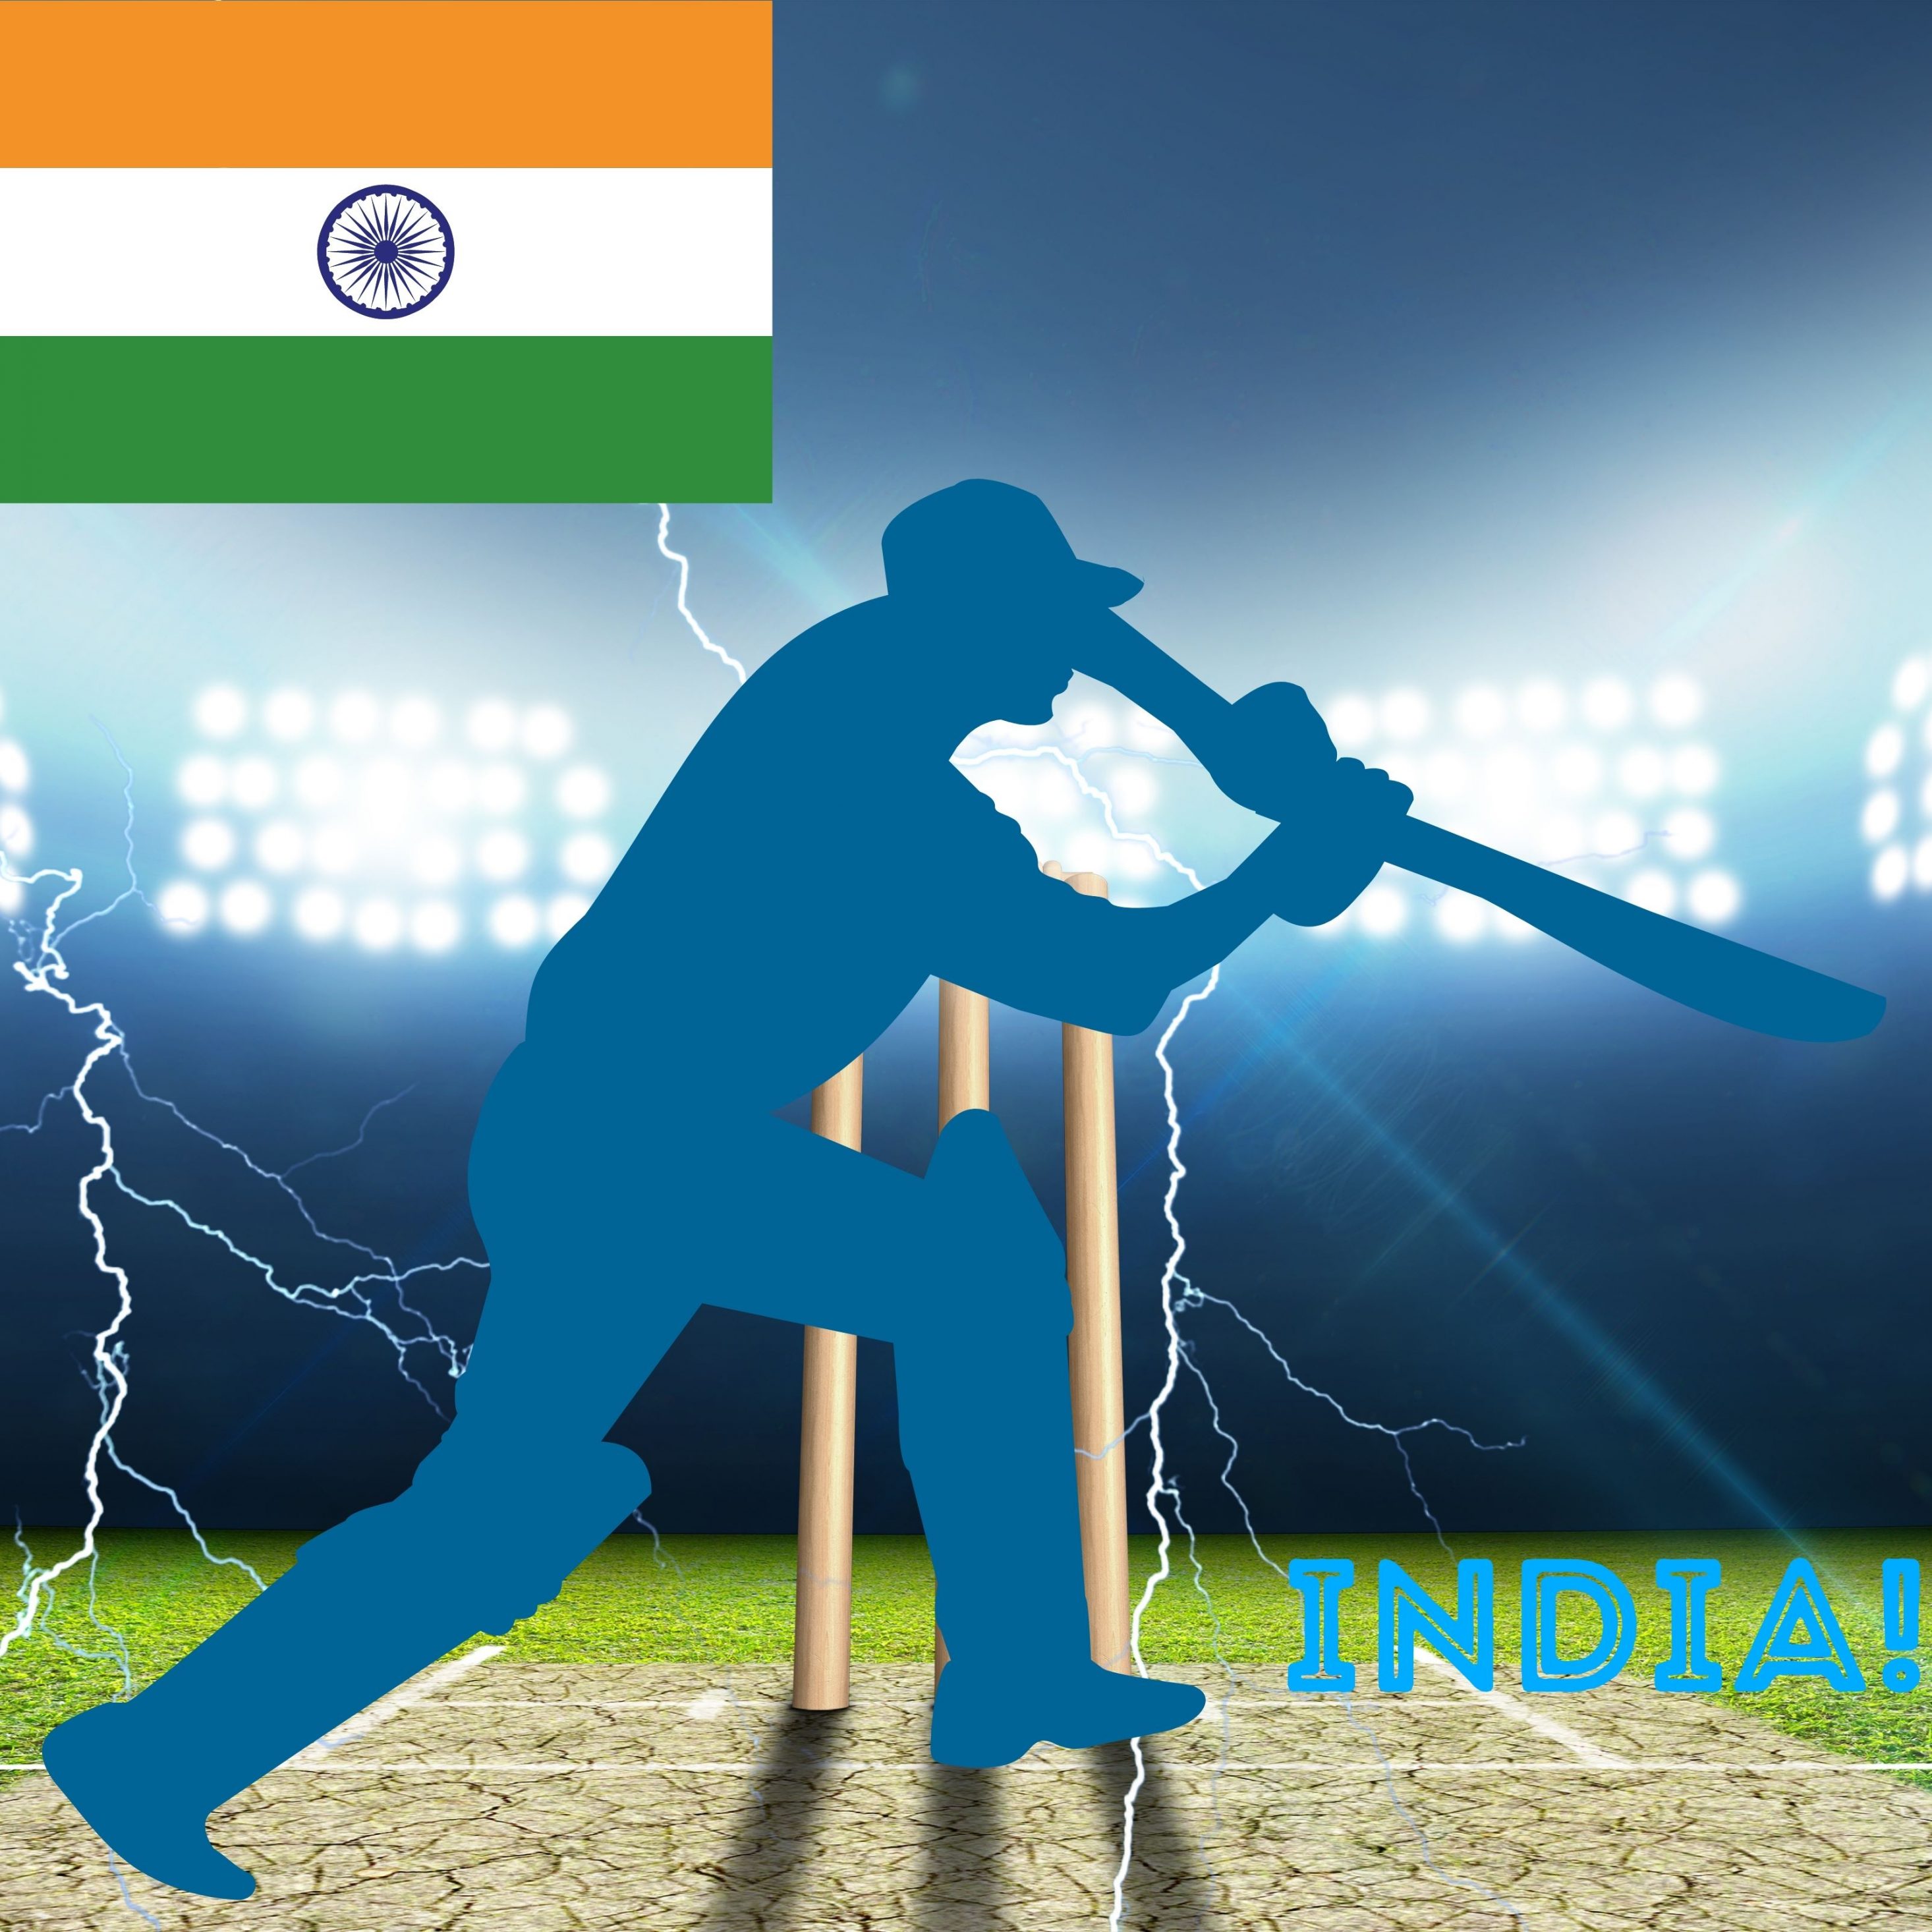 2932x2932 iPad Pro wallpaper 4k India Cricket Stadium iPad Wallpaper 2932x2932 pixels resolution